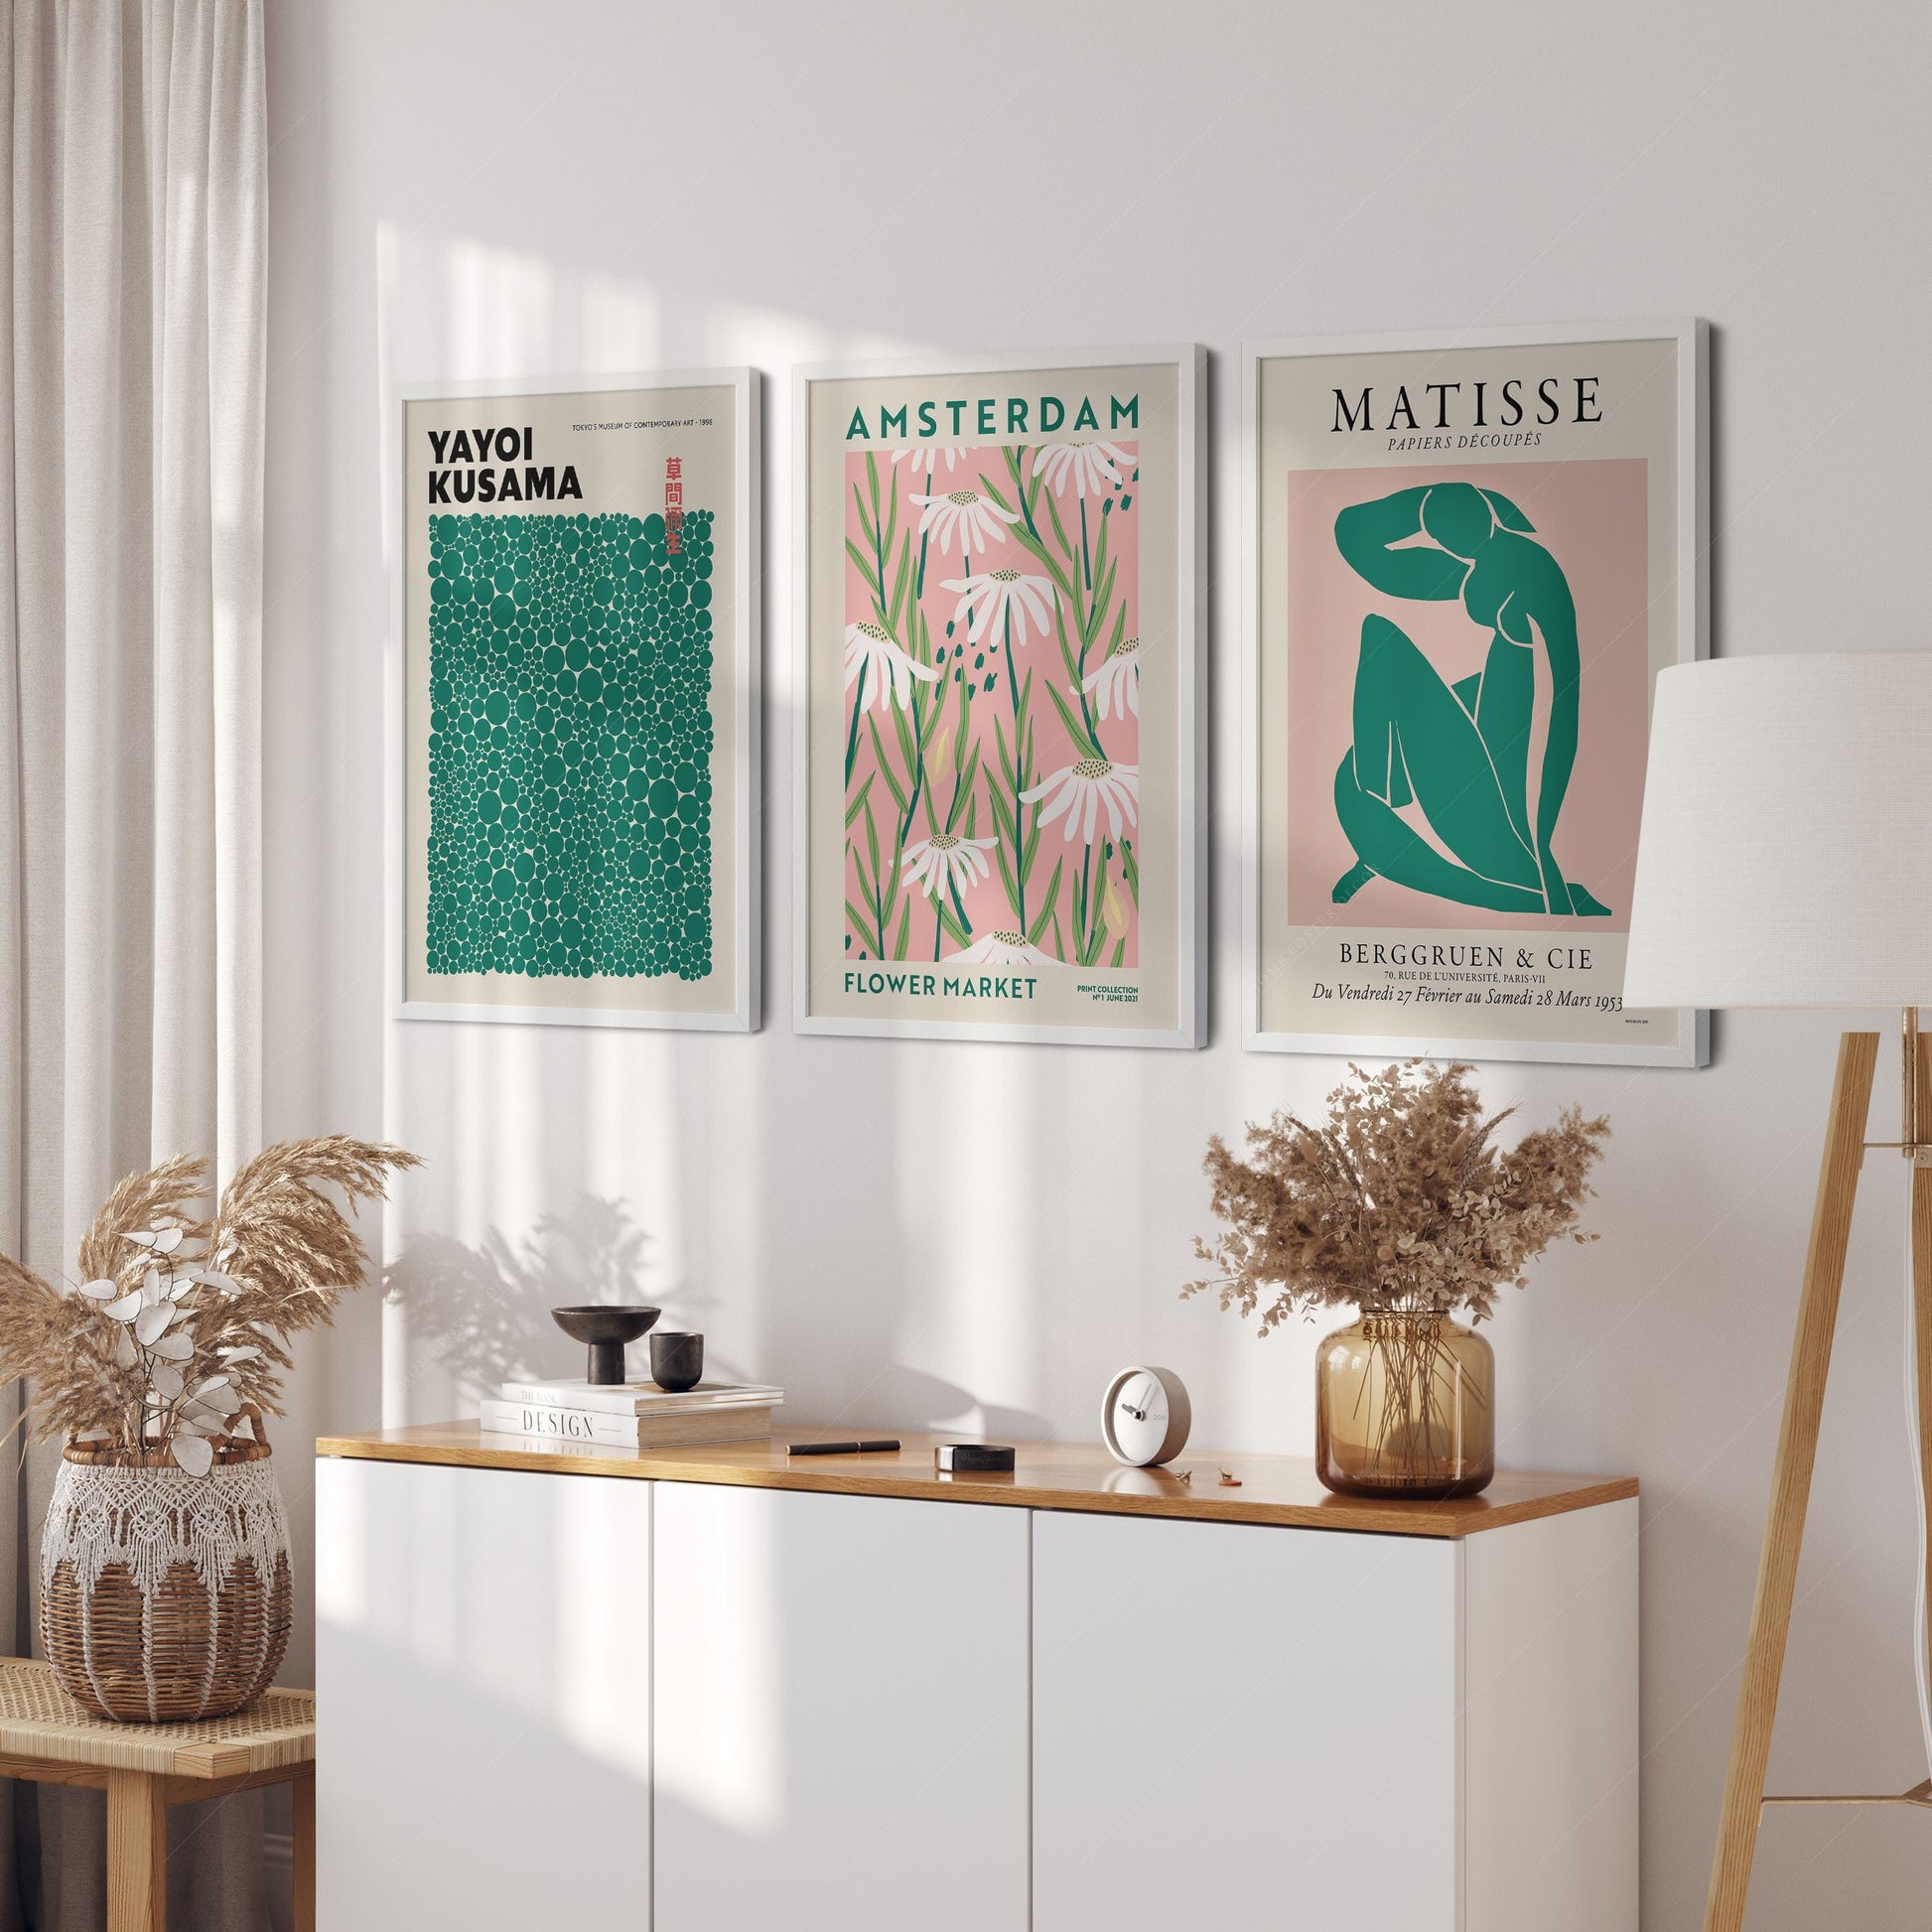 Home Poster Decor Henri Matisse, Modern Gallery Wall, Yayoi Kusama, Flower Market, Set of 3 Prints, Pink and Vivid Green tones